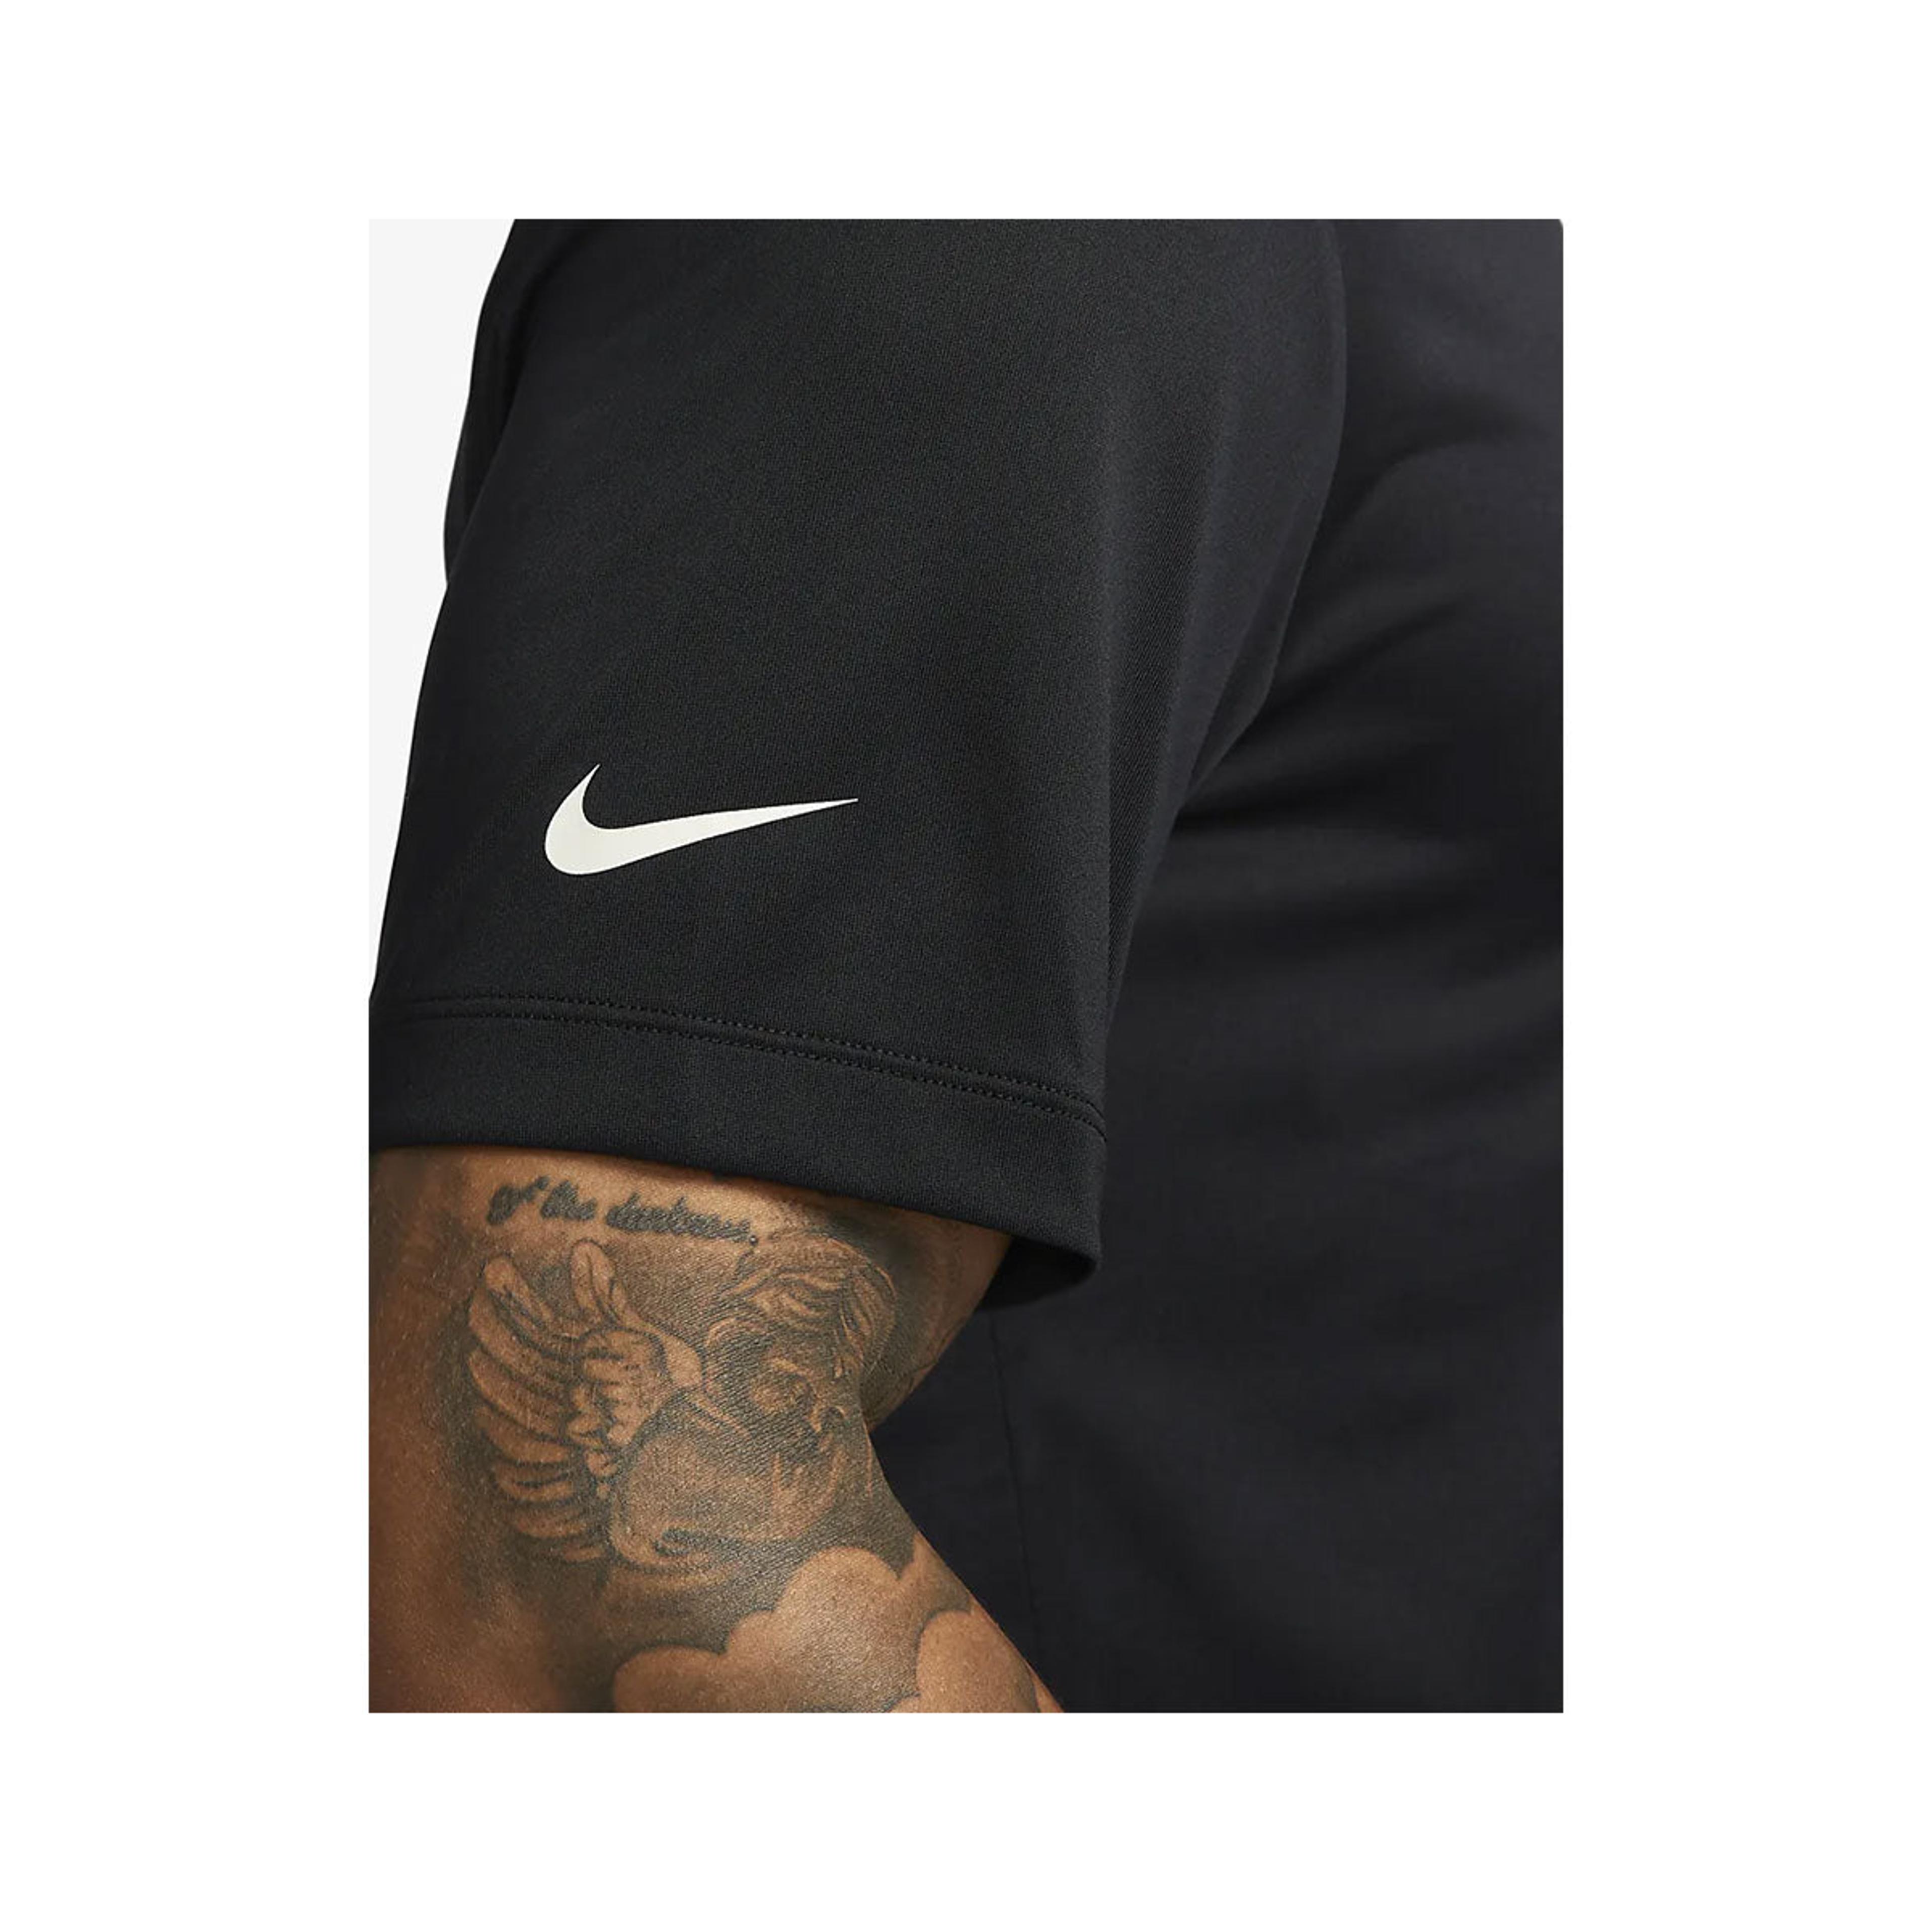 Alternate View 2 of Nike Men's Dri-Fit Fitness T-Shirt